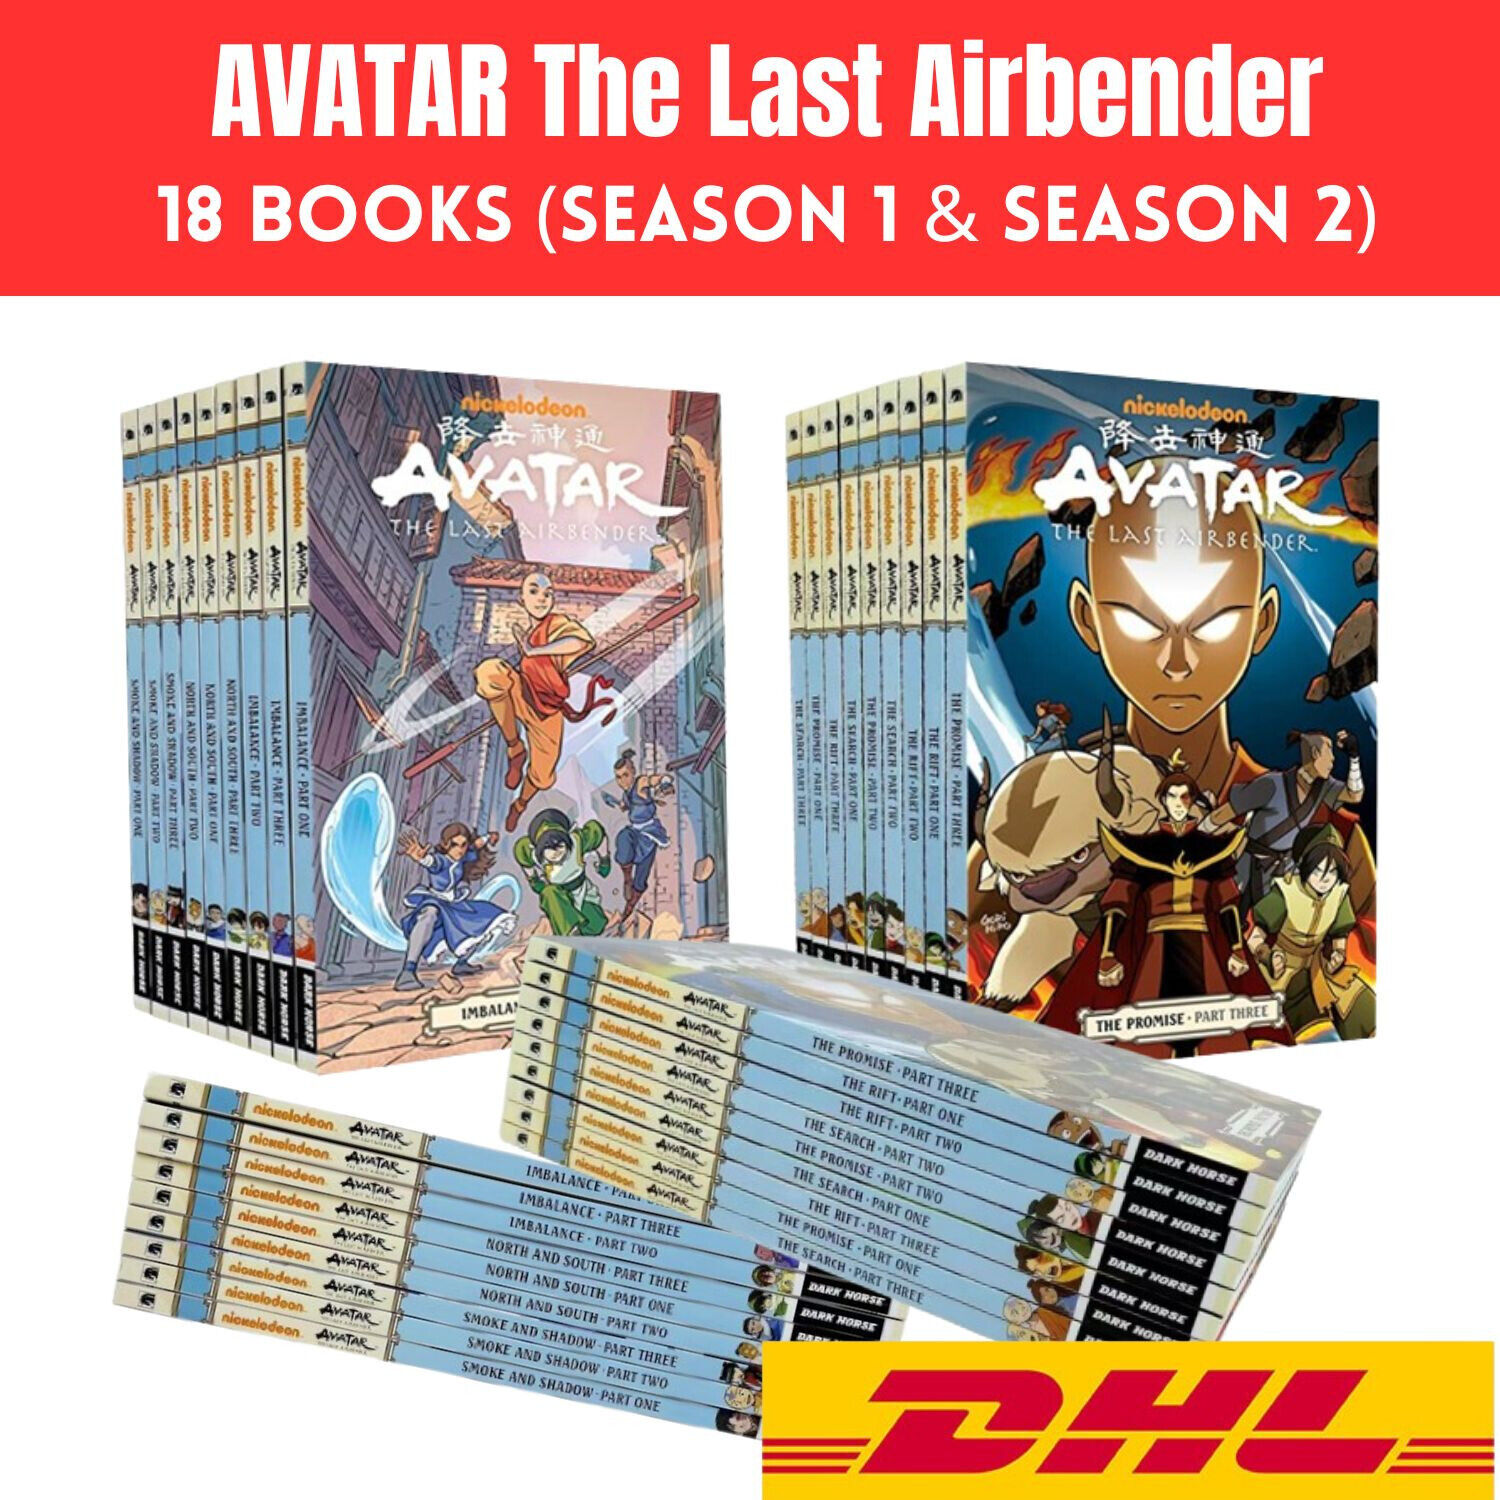 AVATAR The Last Airbender Cartoon Graphic English Comic (18 Books Complete Set)